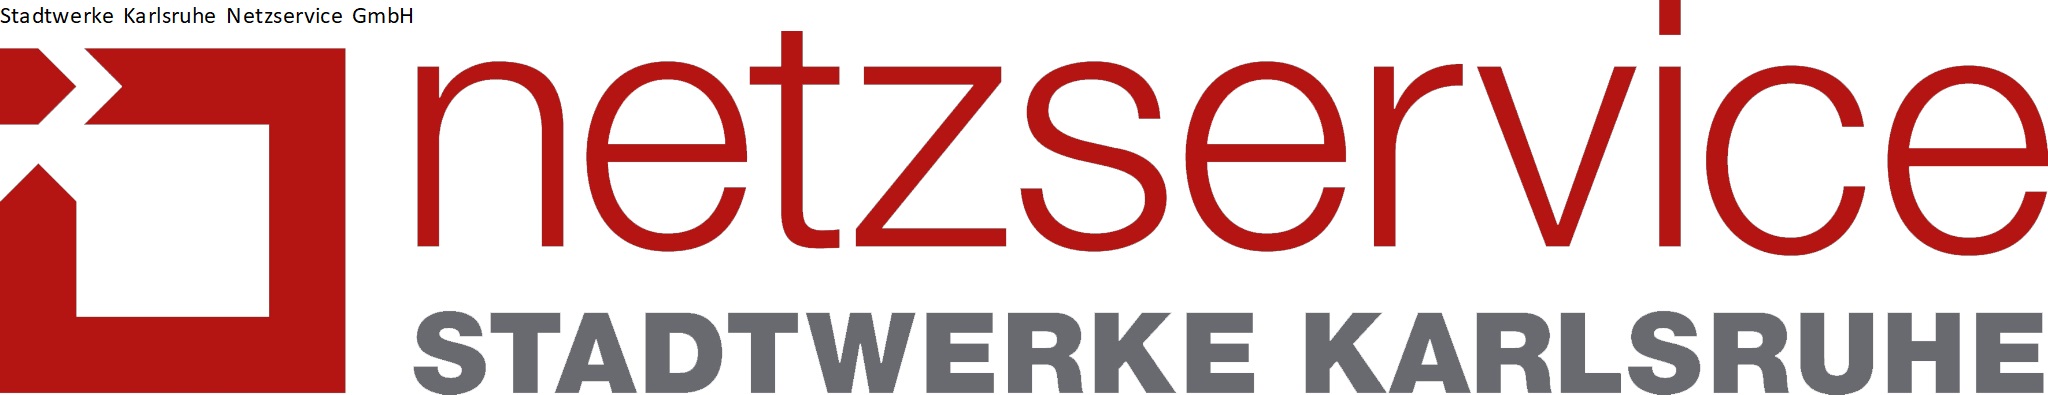 Partnerlogo Stadtwerke Karlsruhe Netzservice GmbH